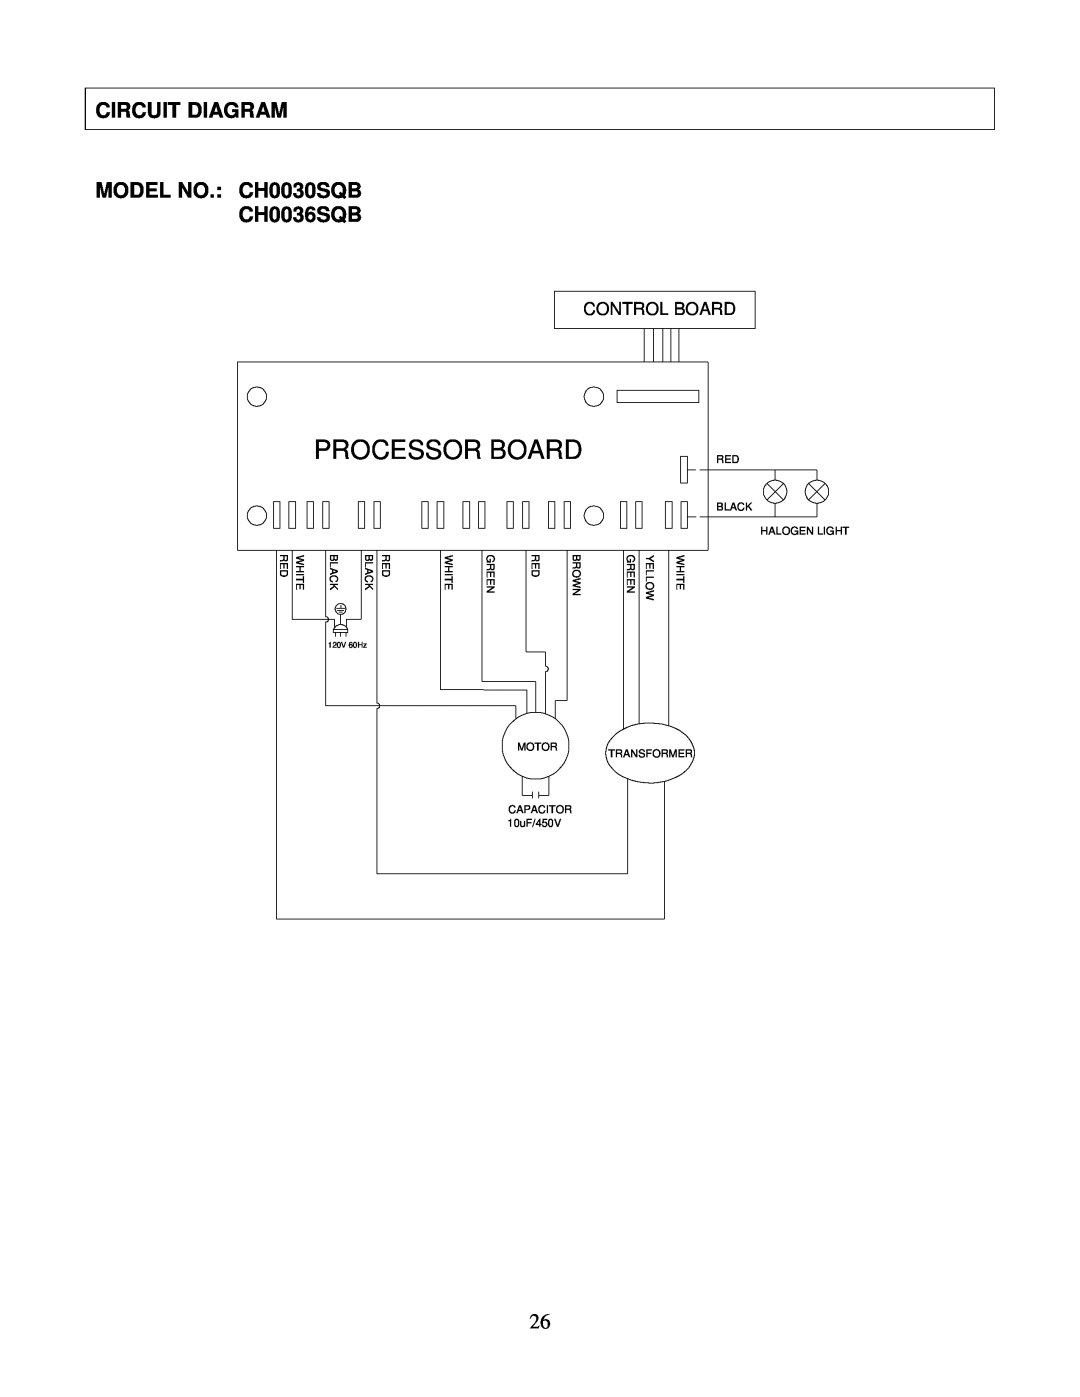 Kobe Range Hoods CH0048SQB, CH0042SQB manual Circuit Diagram, MODEL NO. CH0030SQB CH0036SQB, Processor Board, Control Board 